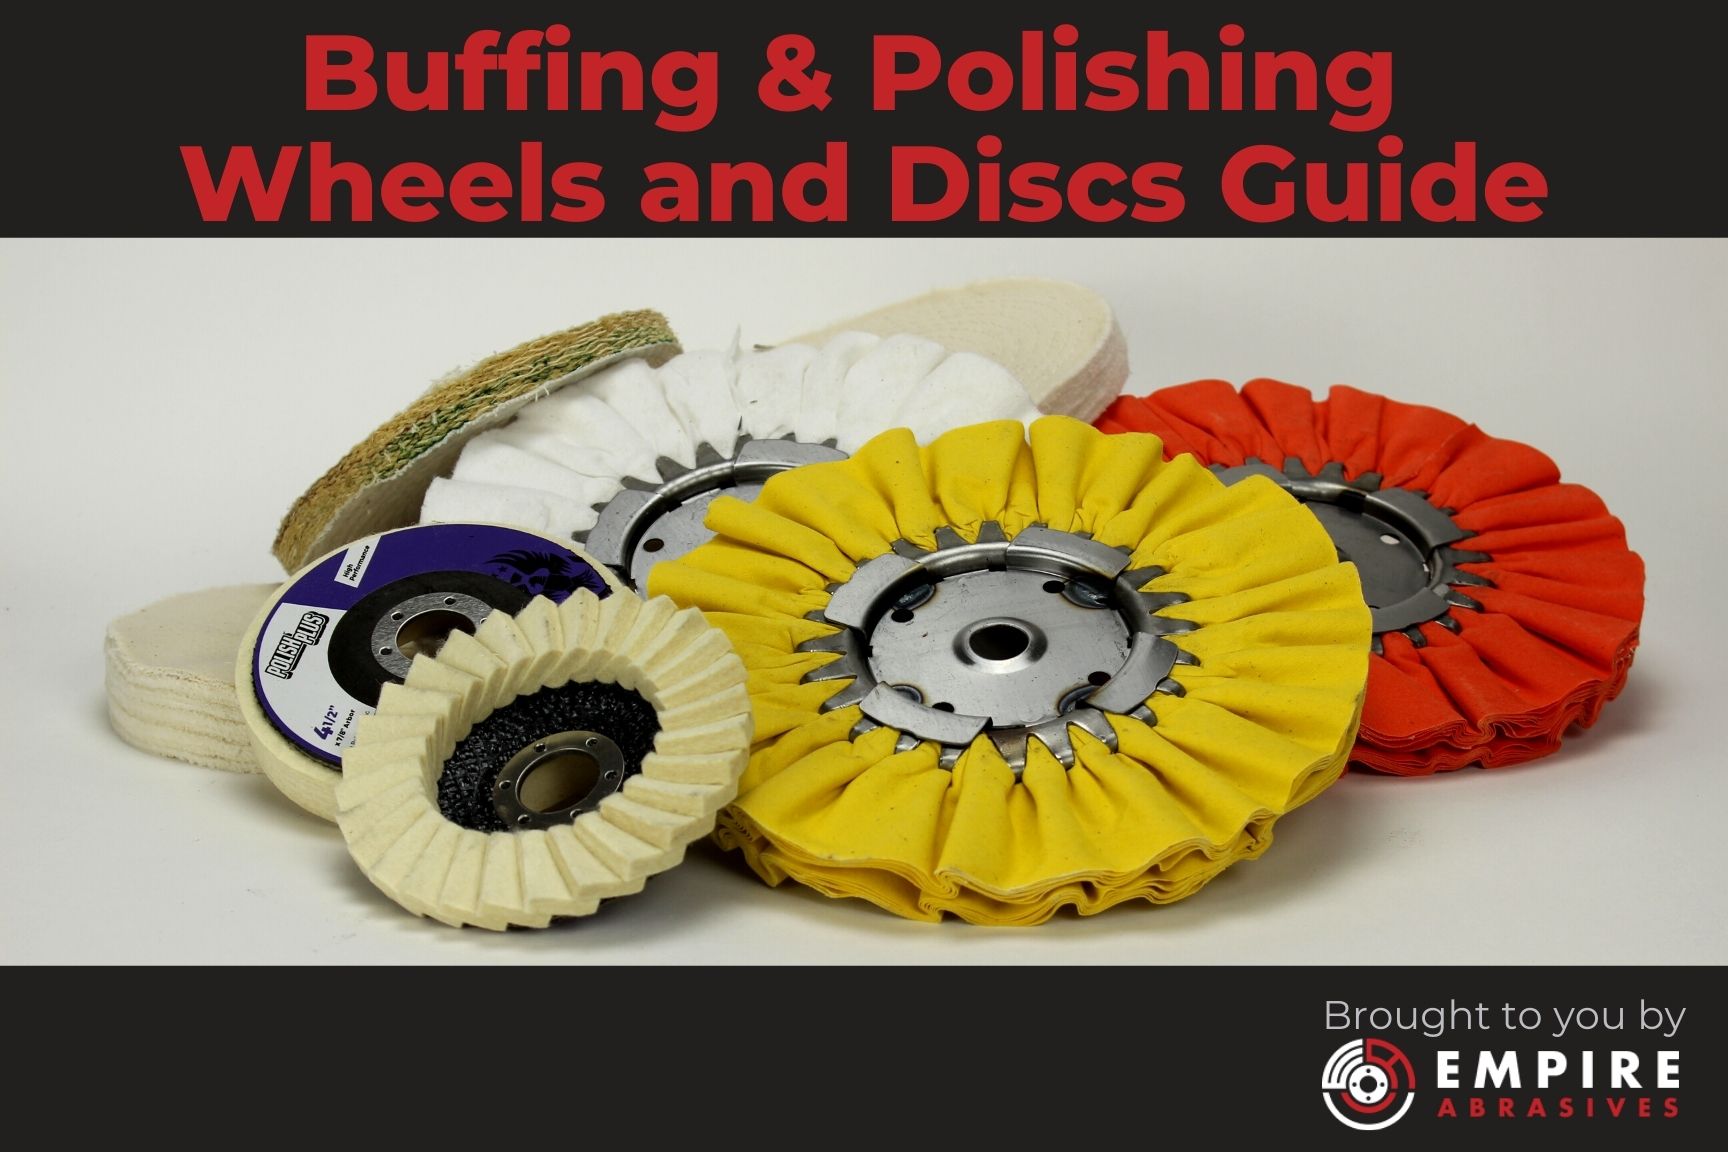 25mm Abrasive Wheel Buffing Polishing Wheel Set Compatible with Rotary Tool-4 Grits 62 Packs Polishing Buffing Wheel Set,YuCool 1